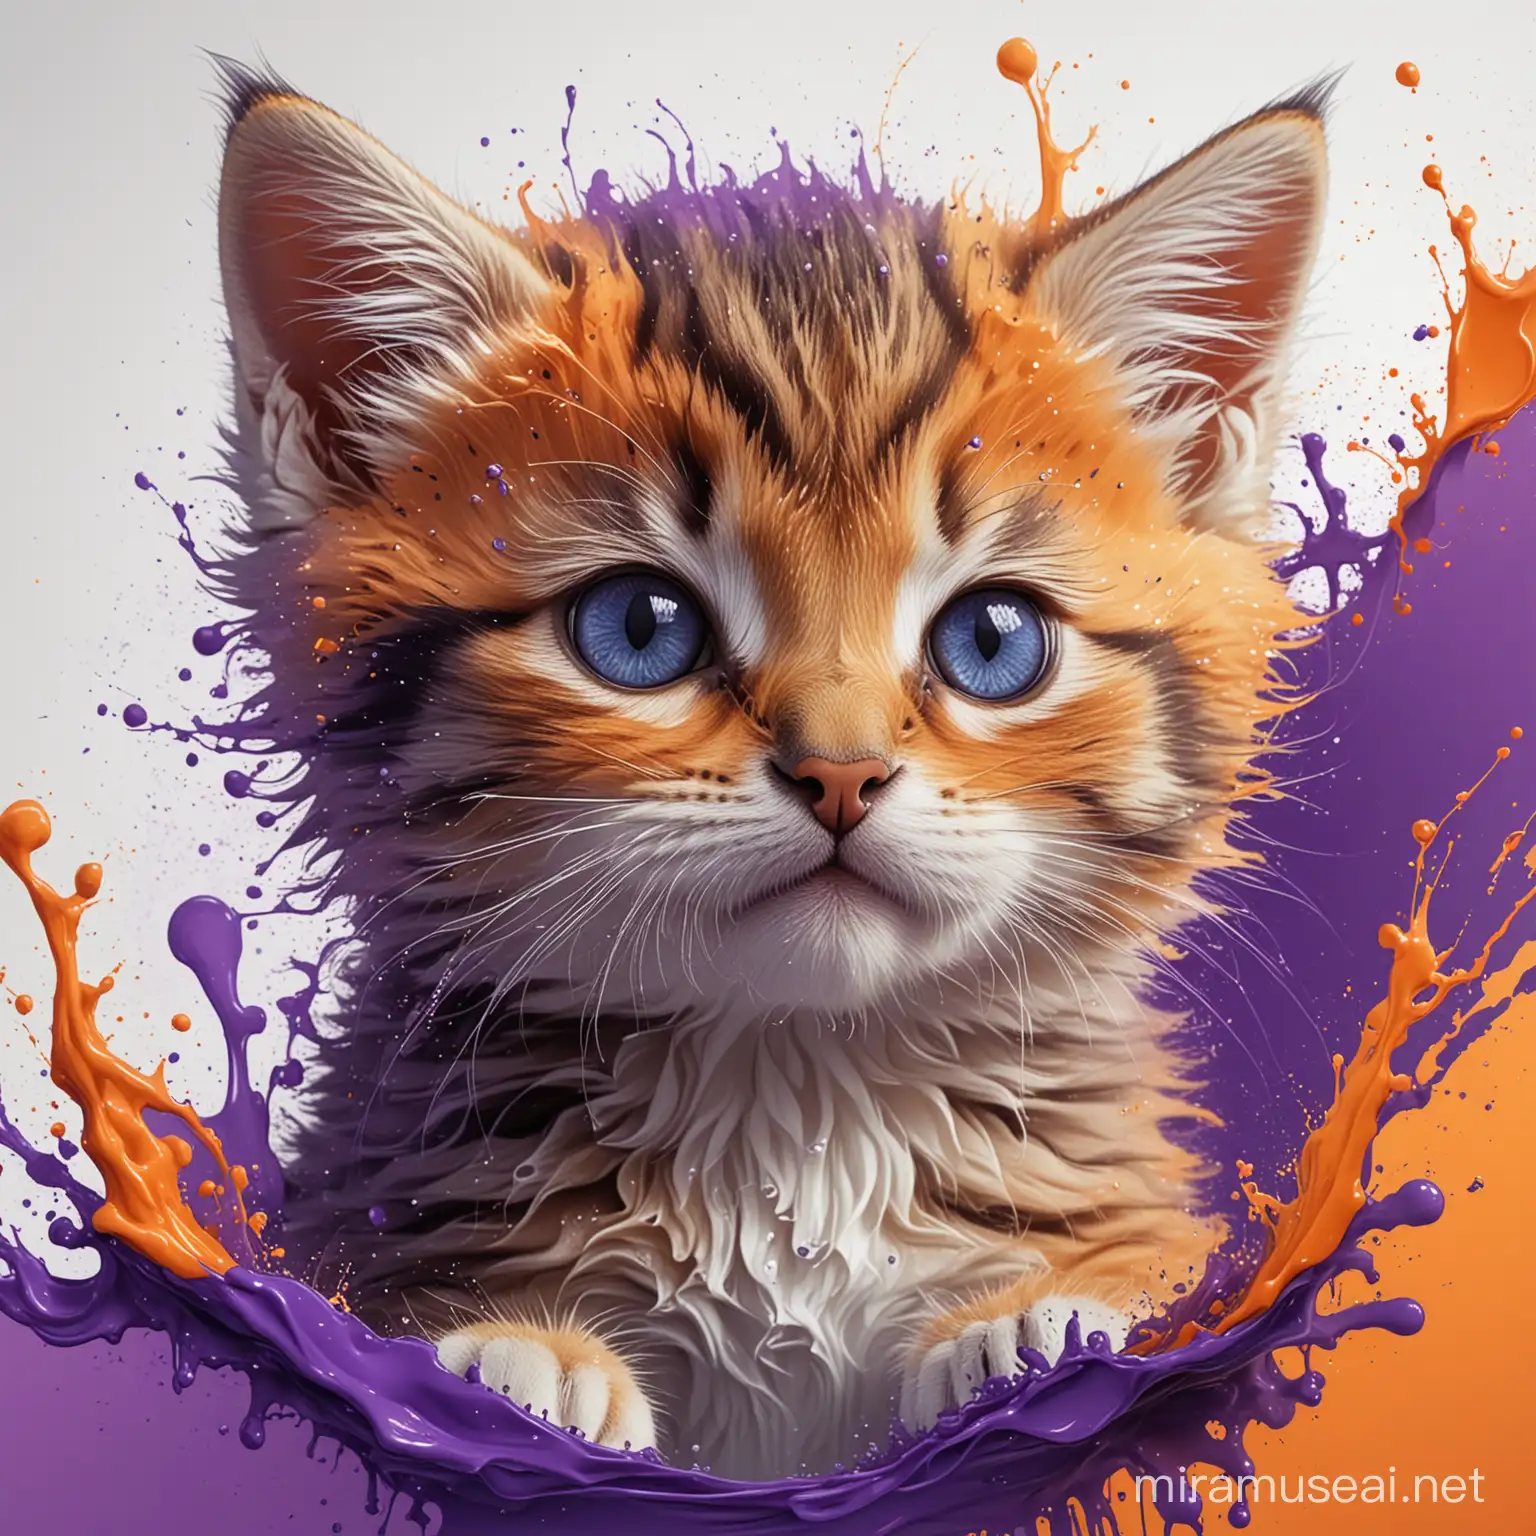 (a cute kitten), Hyperdetailed Eyes, Tee-Shirt Design, Line Art, vibrant dark orange and purple gradient, Ultra Detailed Artistic, Detailed Gorgeous Face, Natural Skin, Water Splash, Color Splash Art, Fire and Ice, Splatter